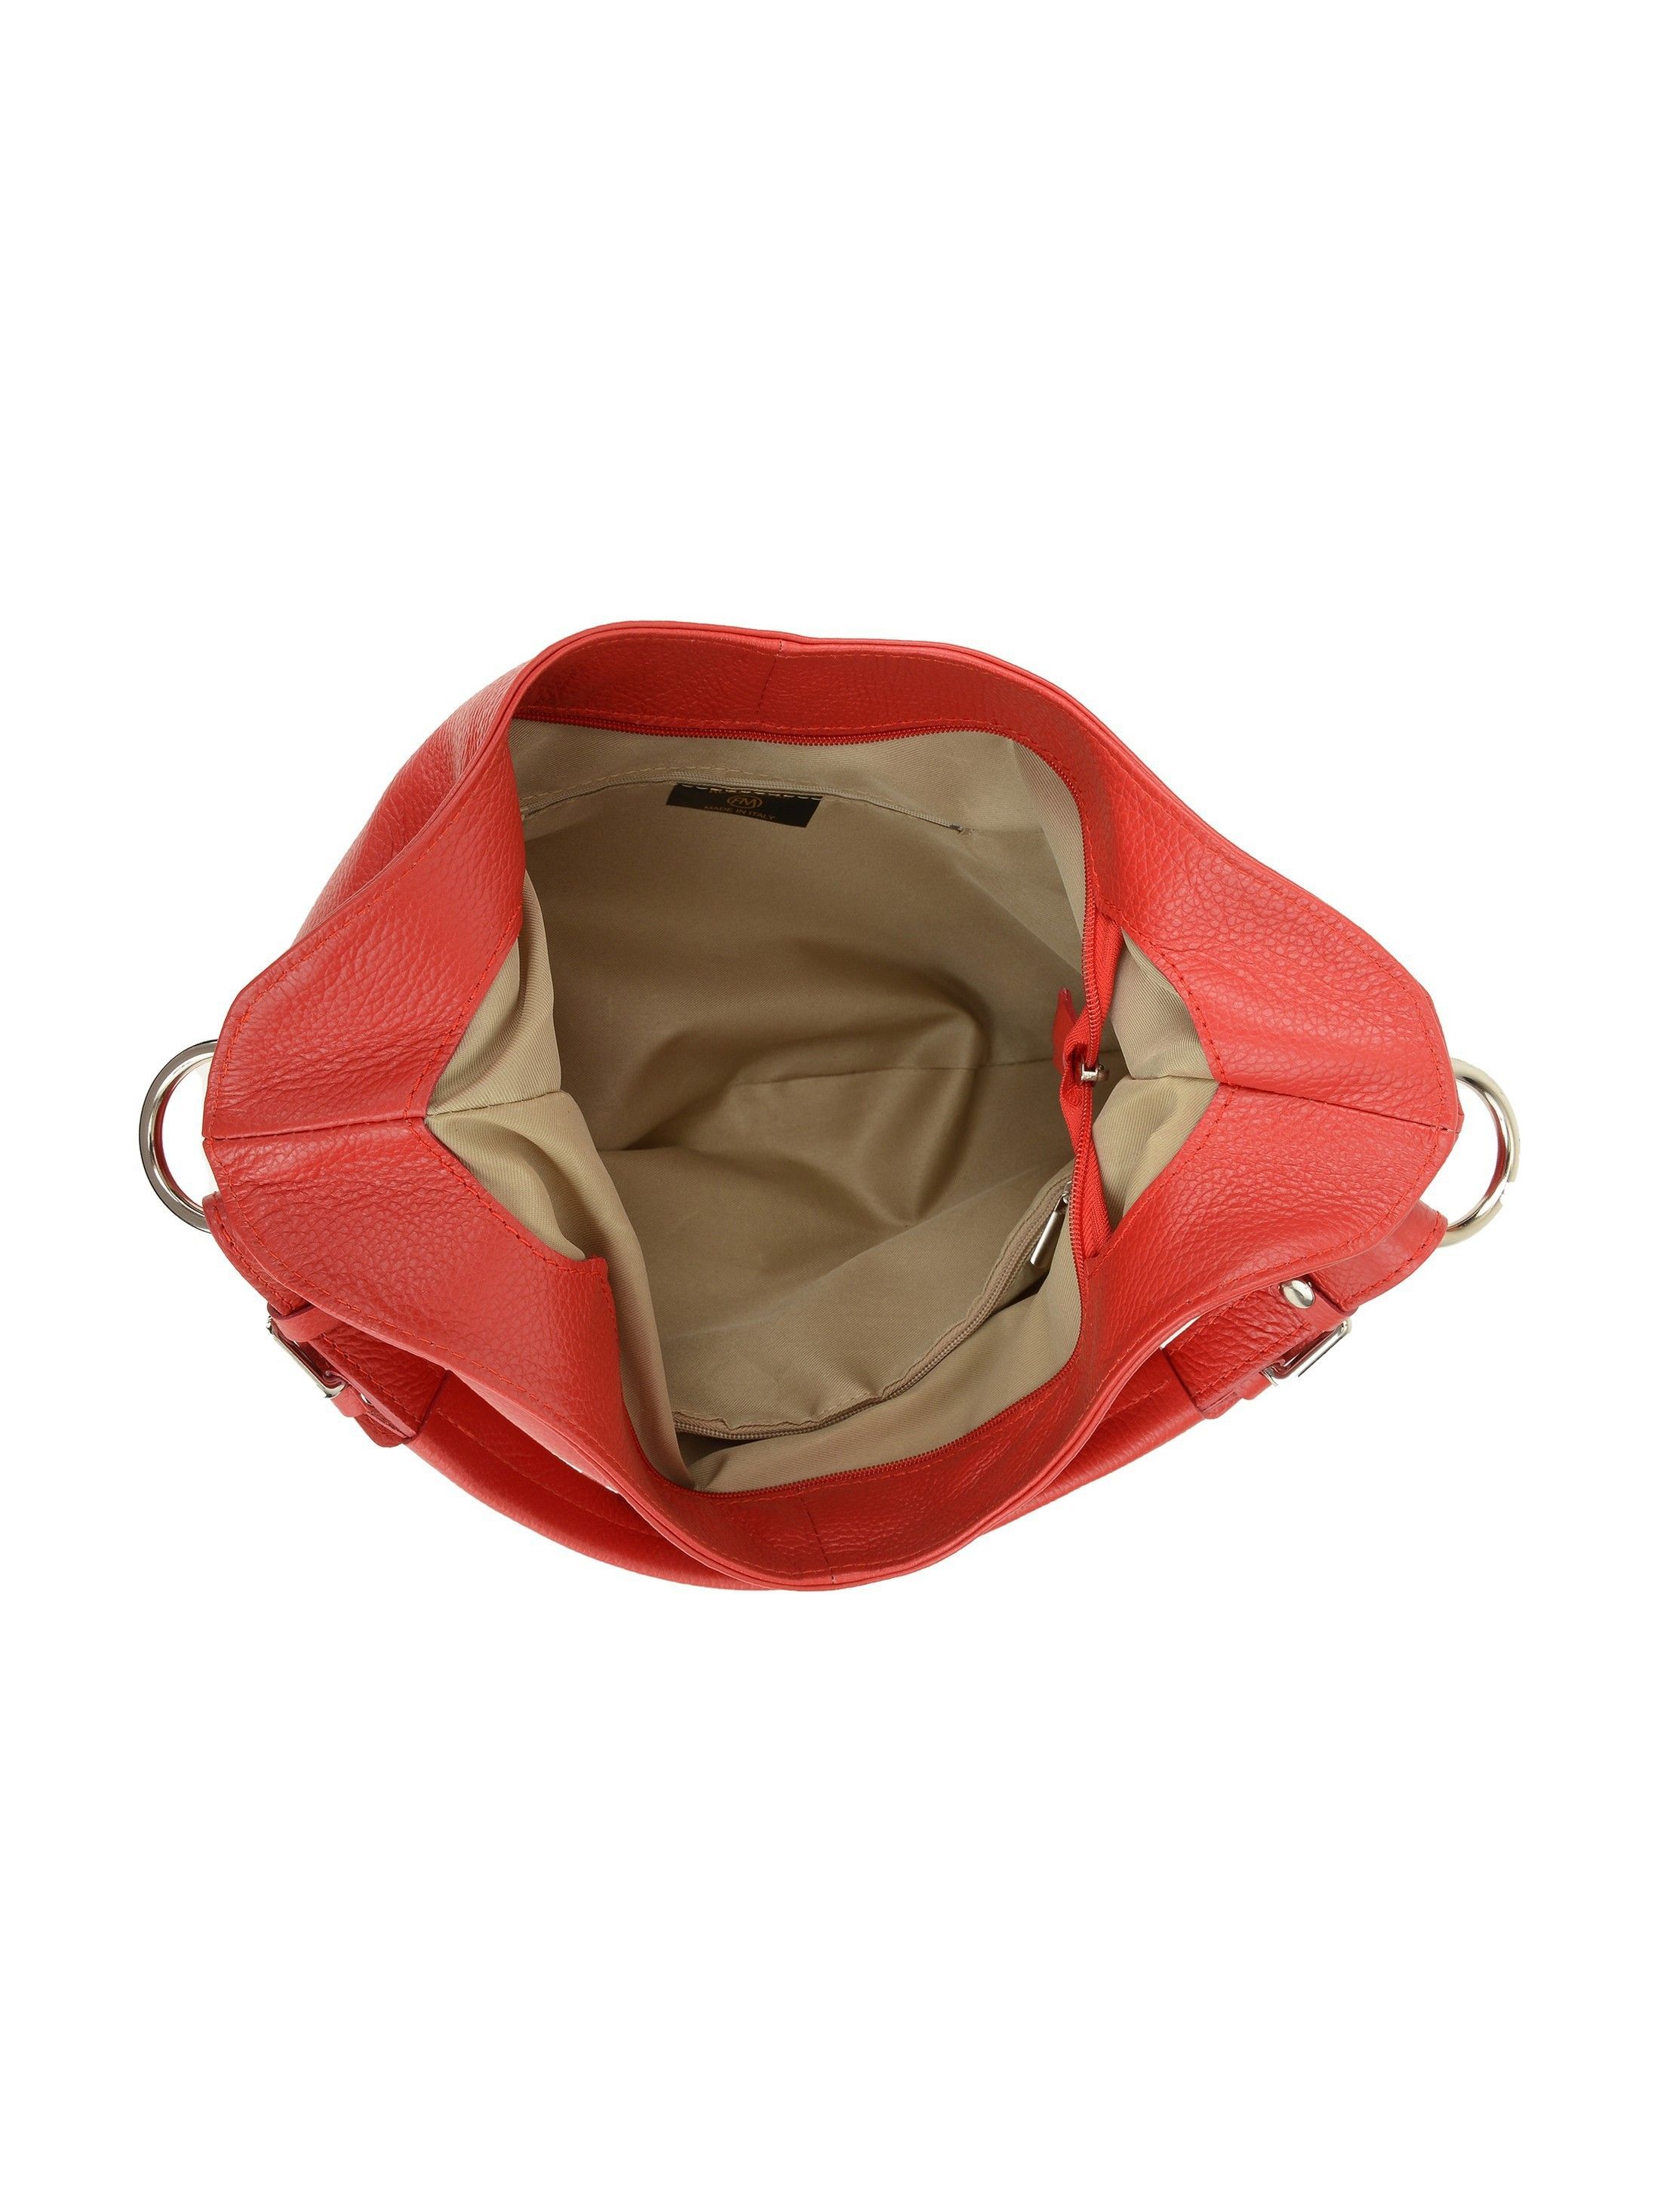 Top Handle Bag
100% cow leather
Top zip closure
Interior zipped pocket
Front zip pocket
Back zip pocket
Dimensions (L):40x42x5.5 cm
Handle: 50 cm non adjustable
Shoulder strap: /